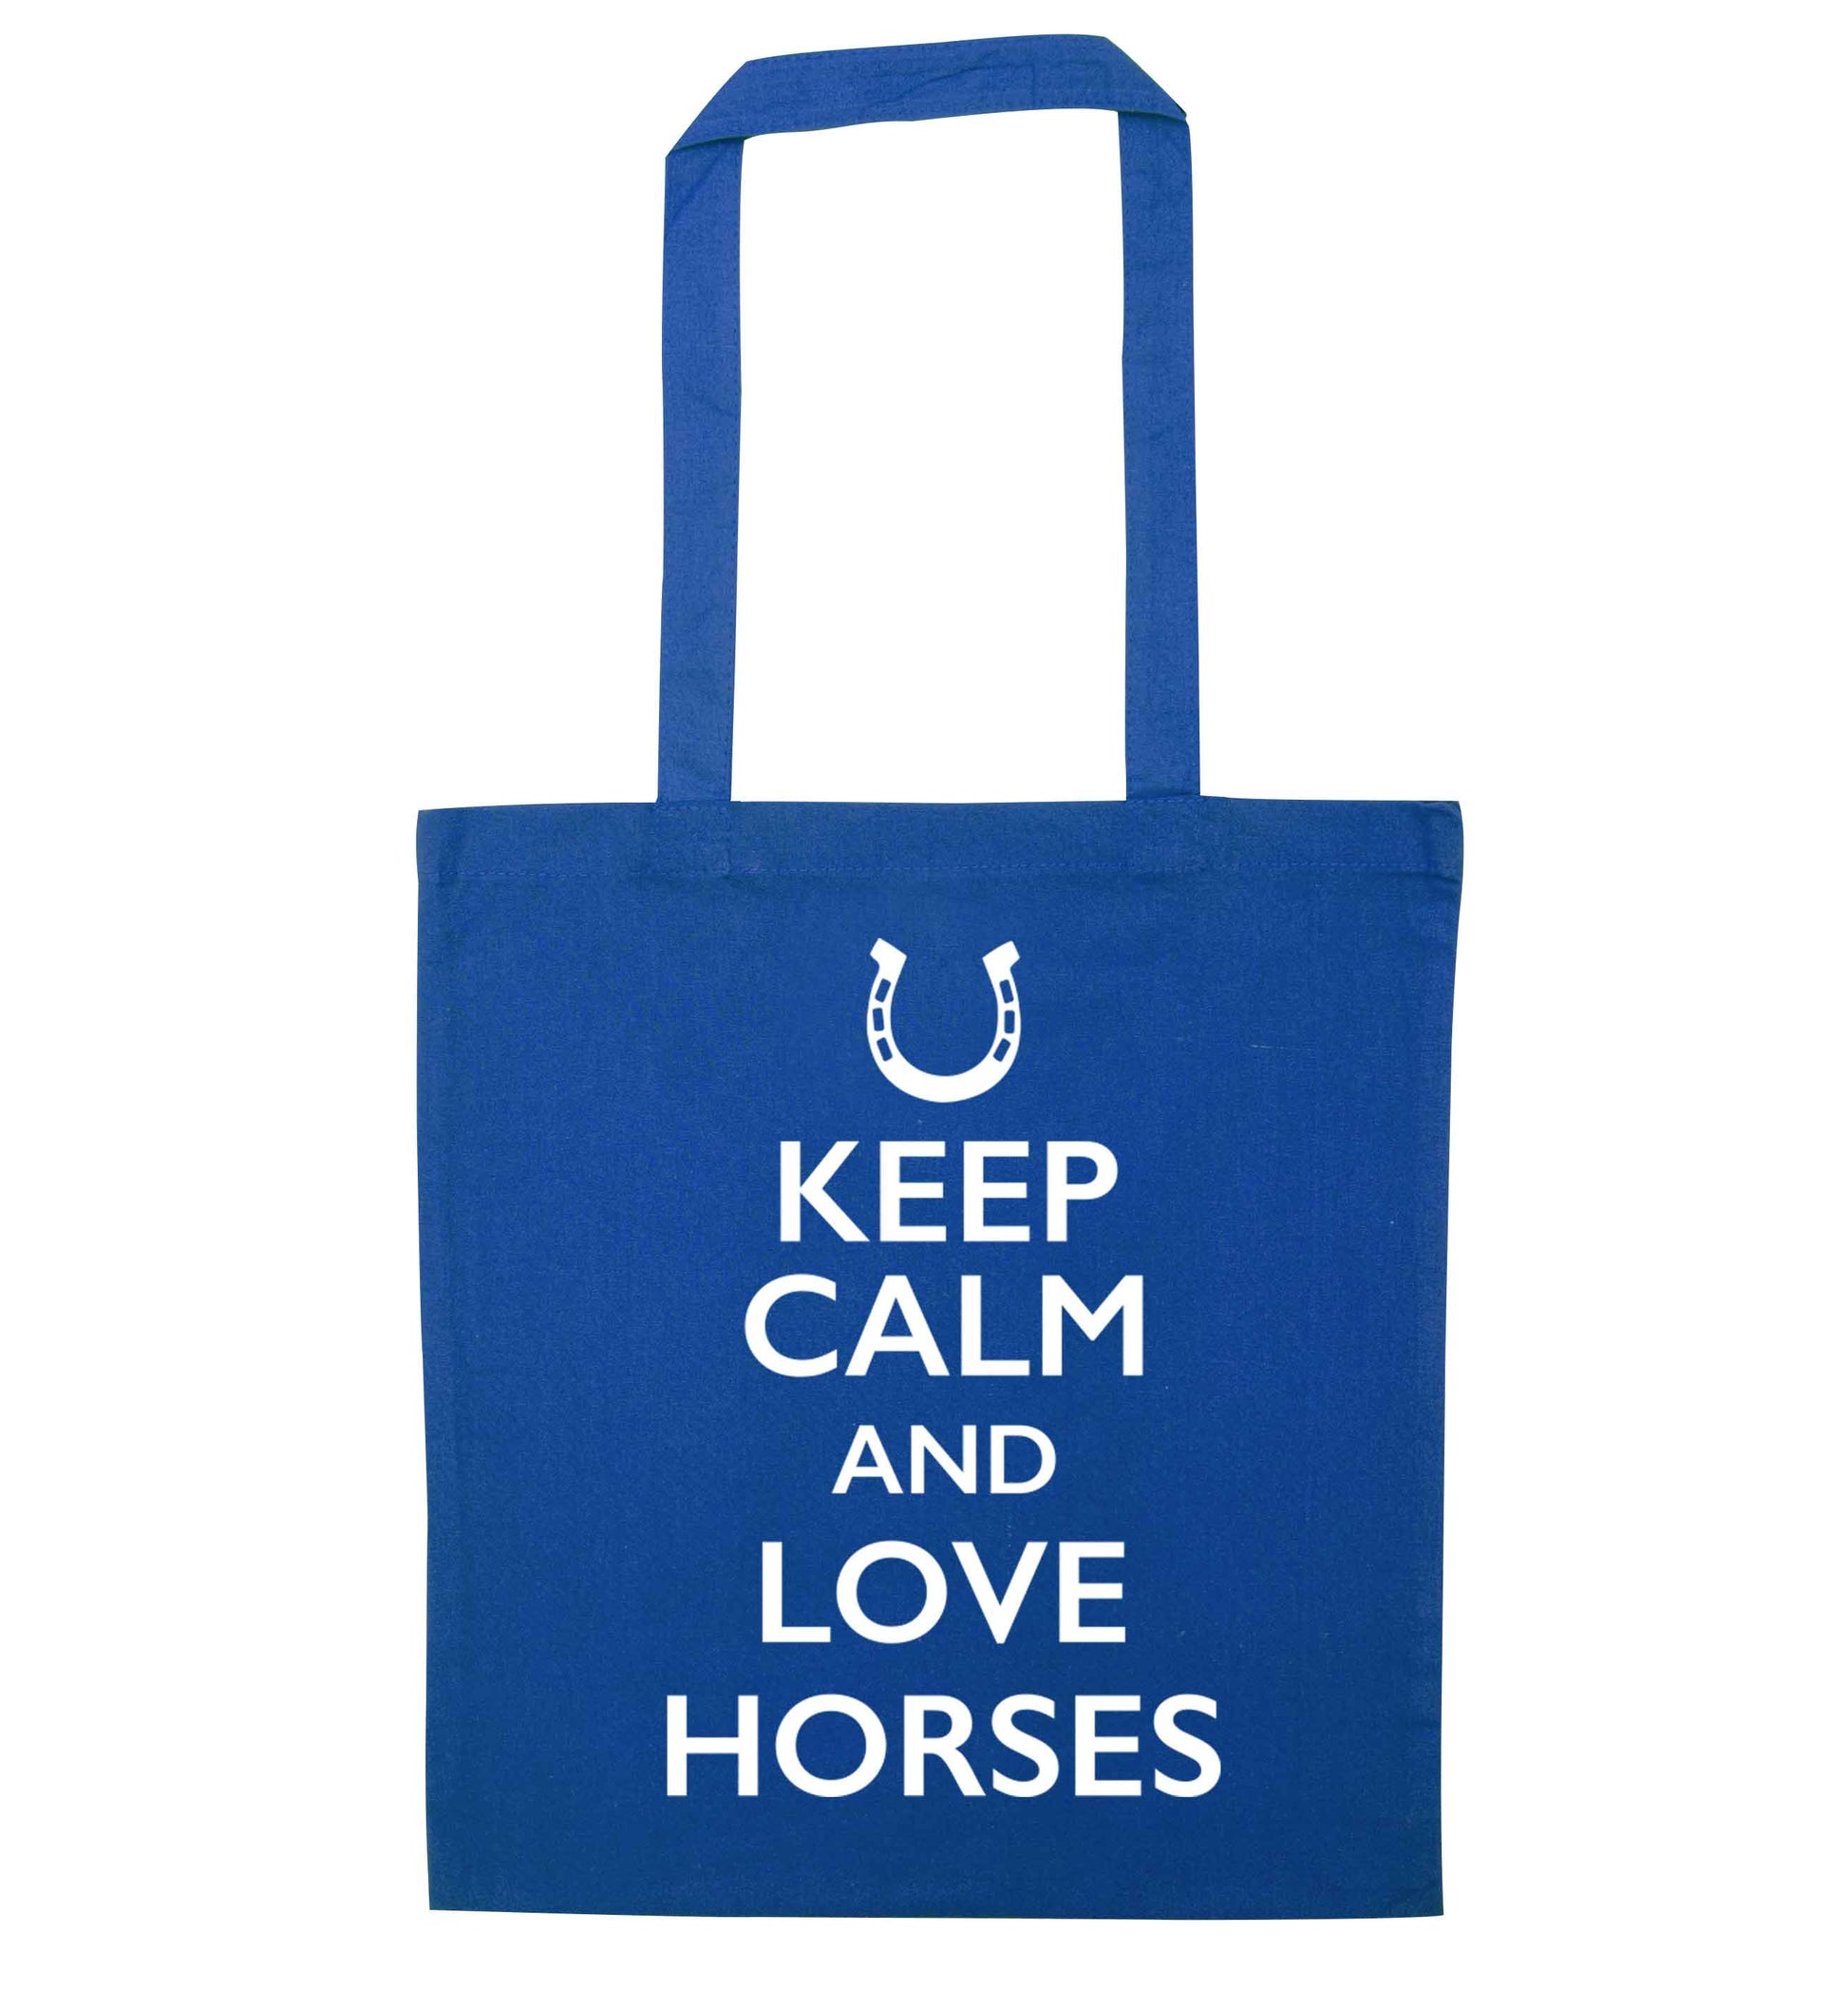 Keep calm and love horses blue tote bag